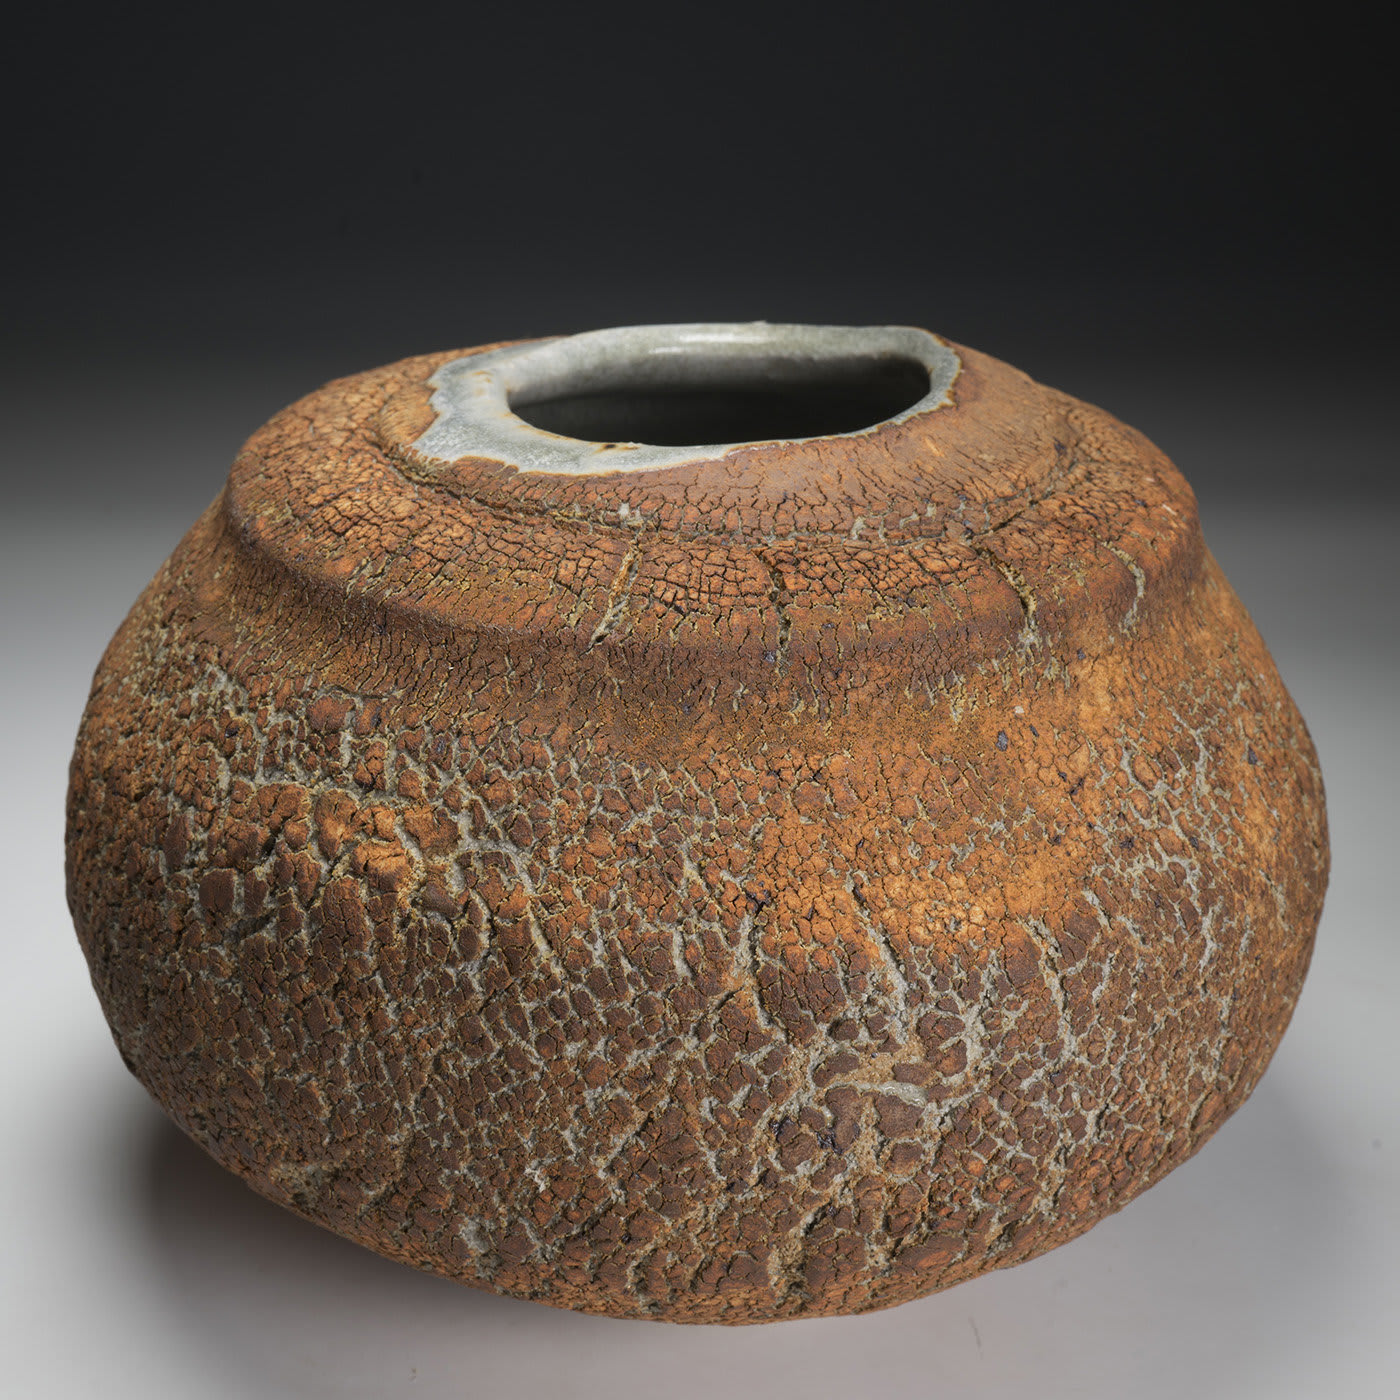 Toscana Earth Table Vase #1 - Terry Davies